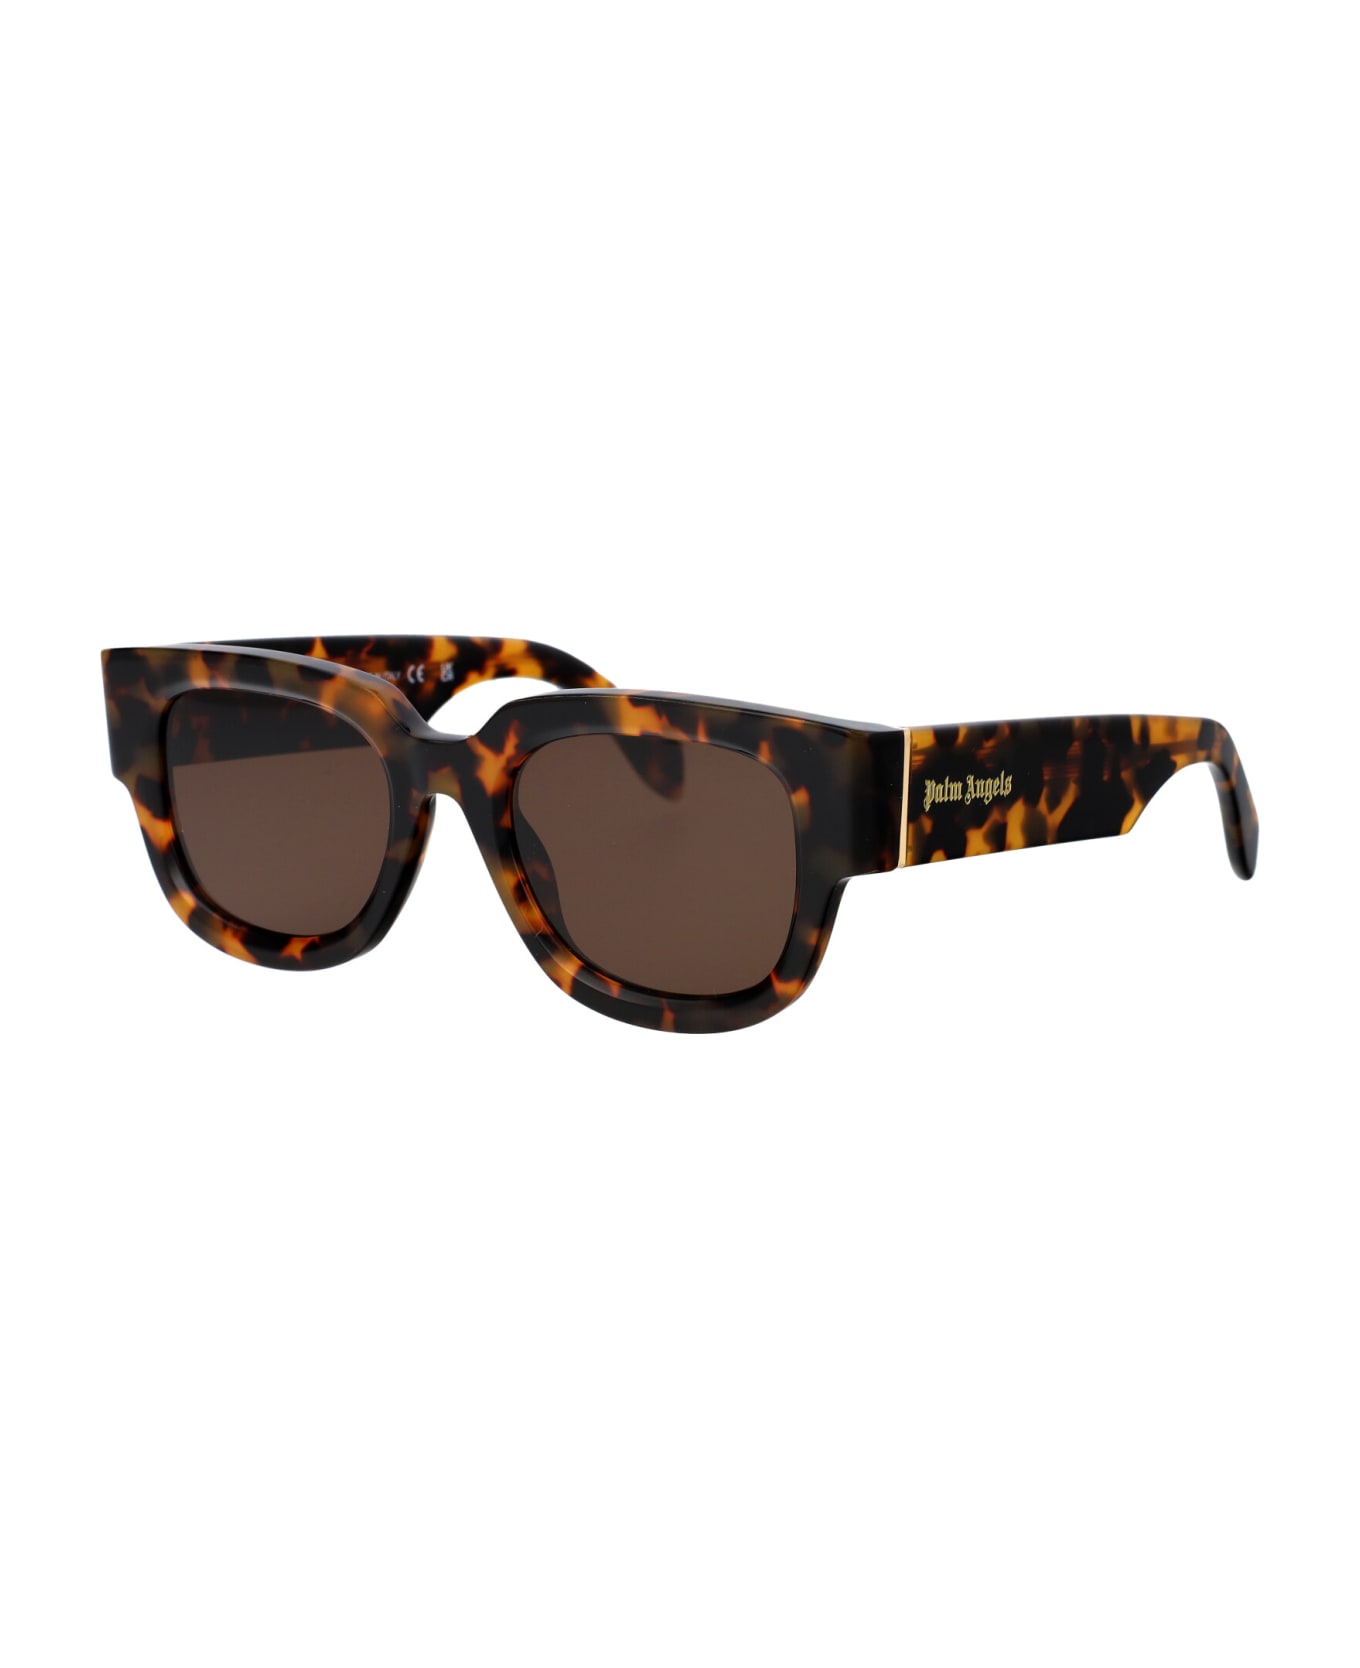 Palm Angels Monterey Sunglasses - 6064 HAVANA